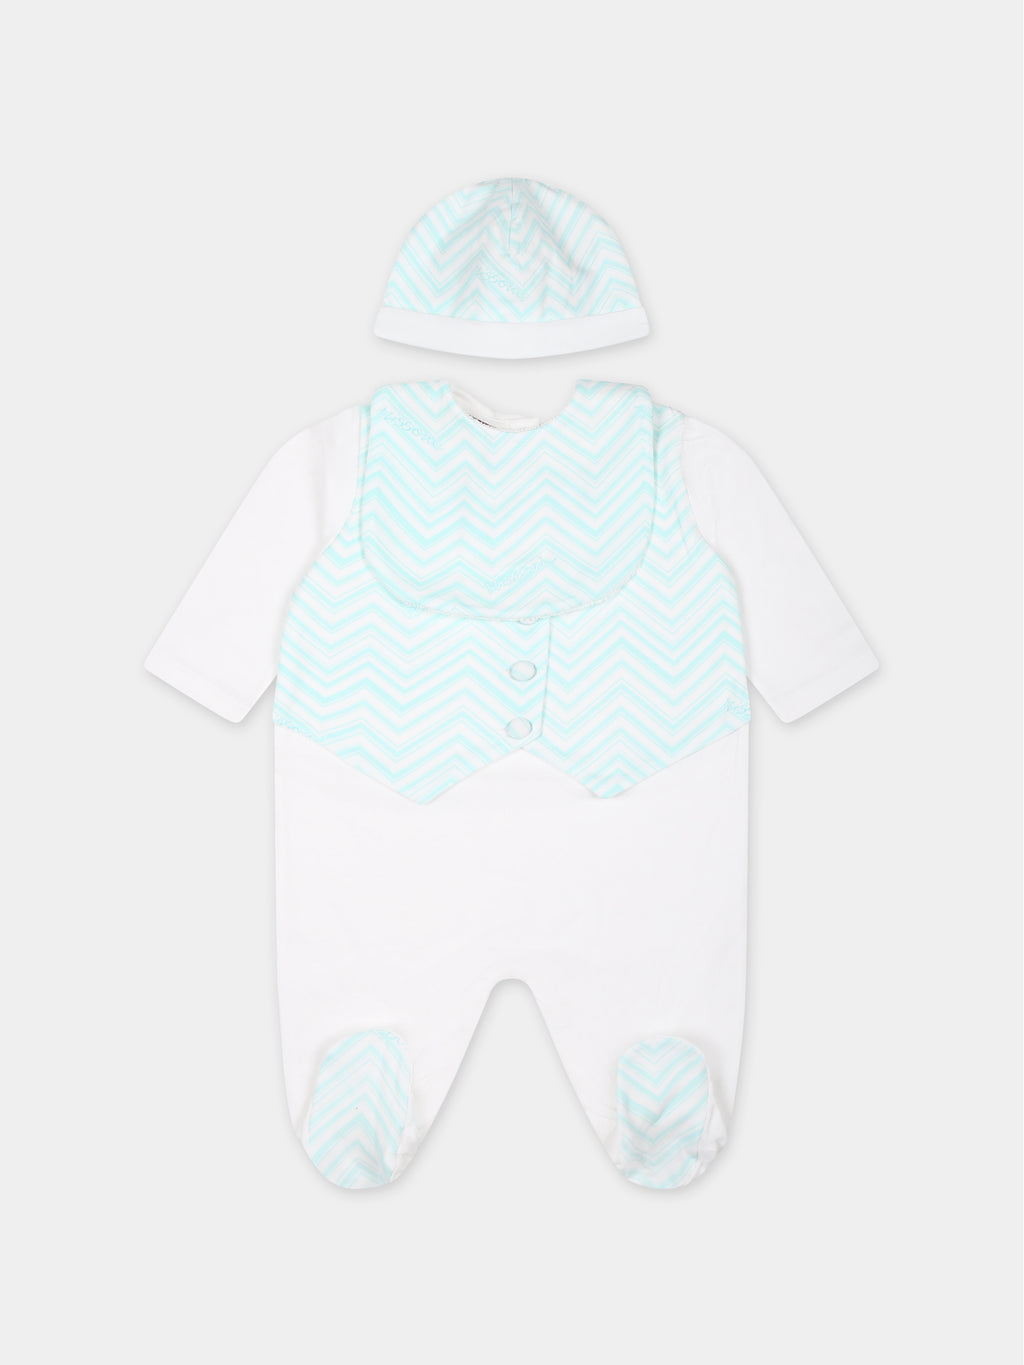 White serfor baby boy with chevron pattern